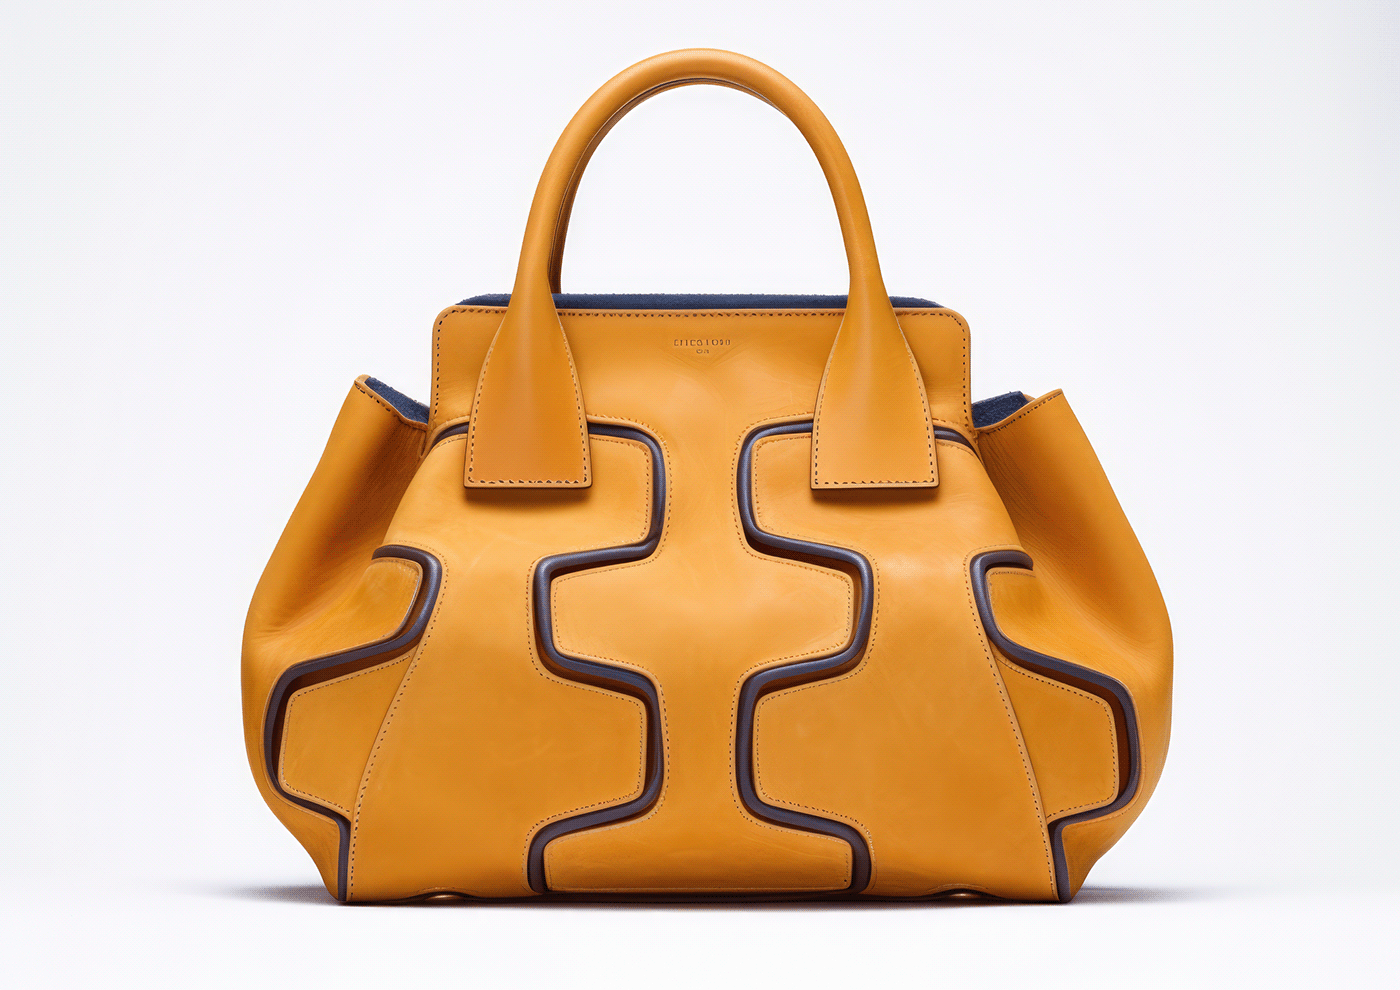 handbag Fashion  moda Style beauty woman leather goods luxury bag Handbags Design